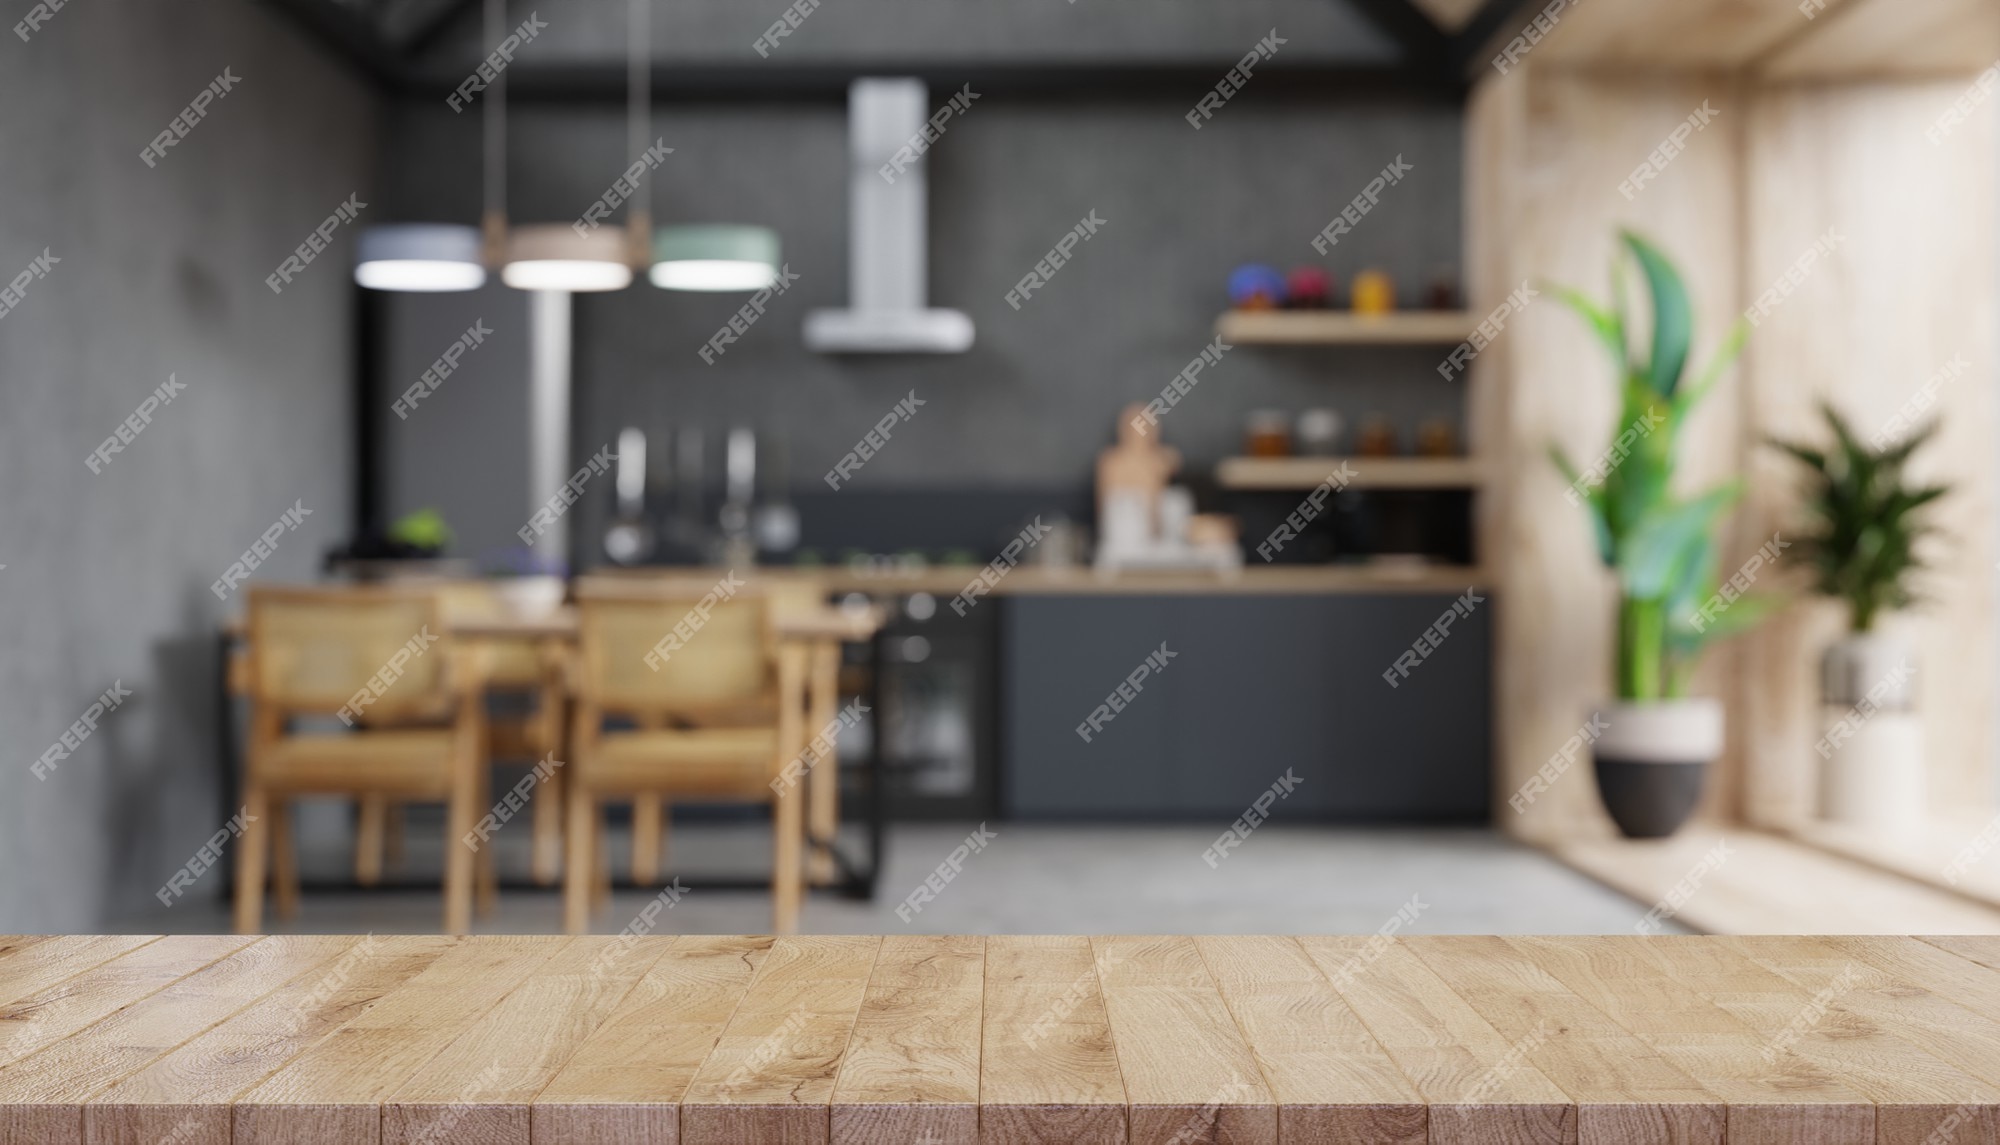 Pogo stick jump apelación moneda Mesa de madera sobre encimera de cocina borrosa. representación 3d | Foto  Premium